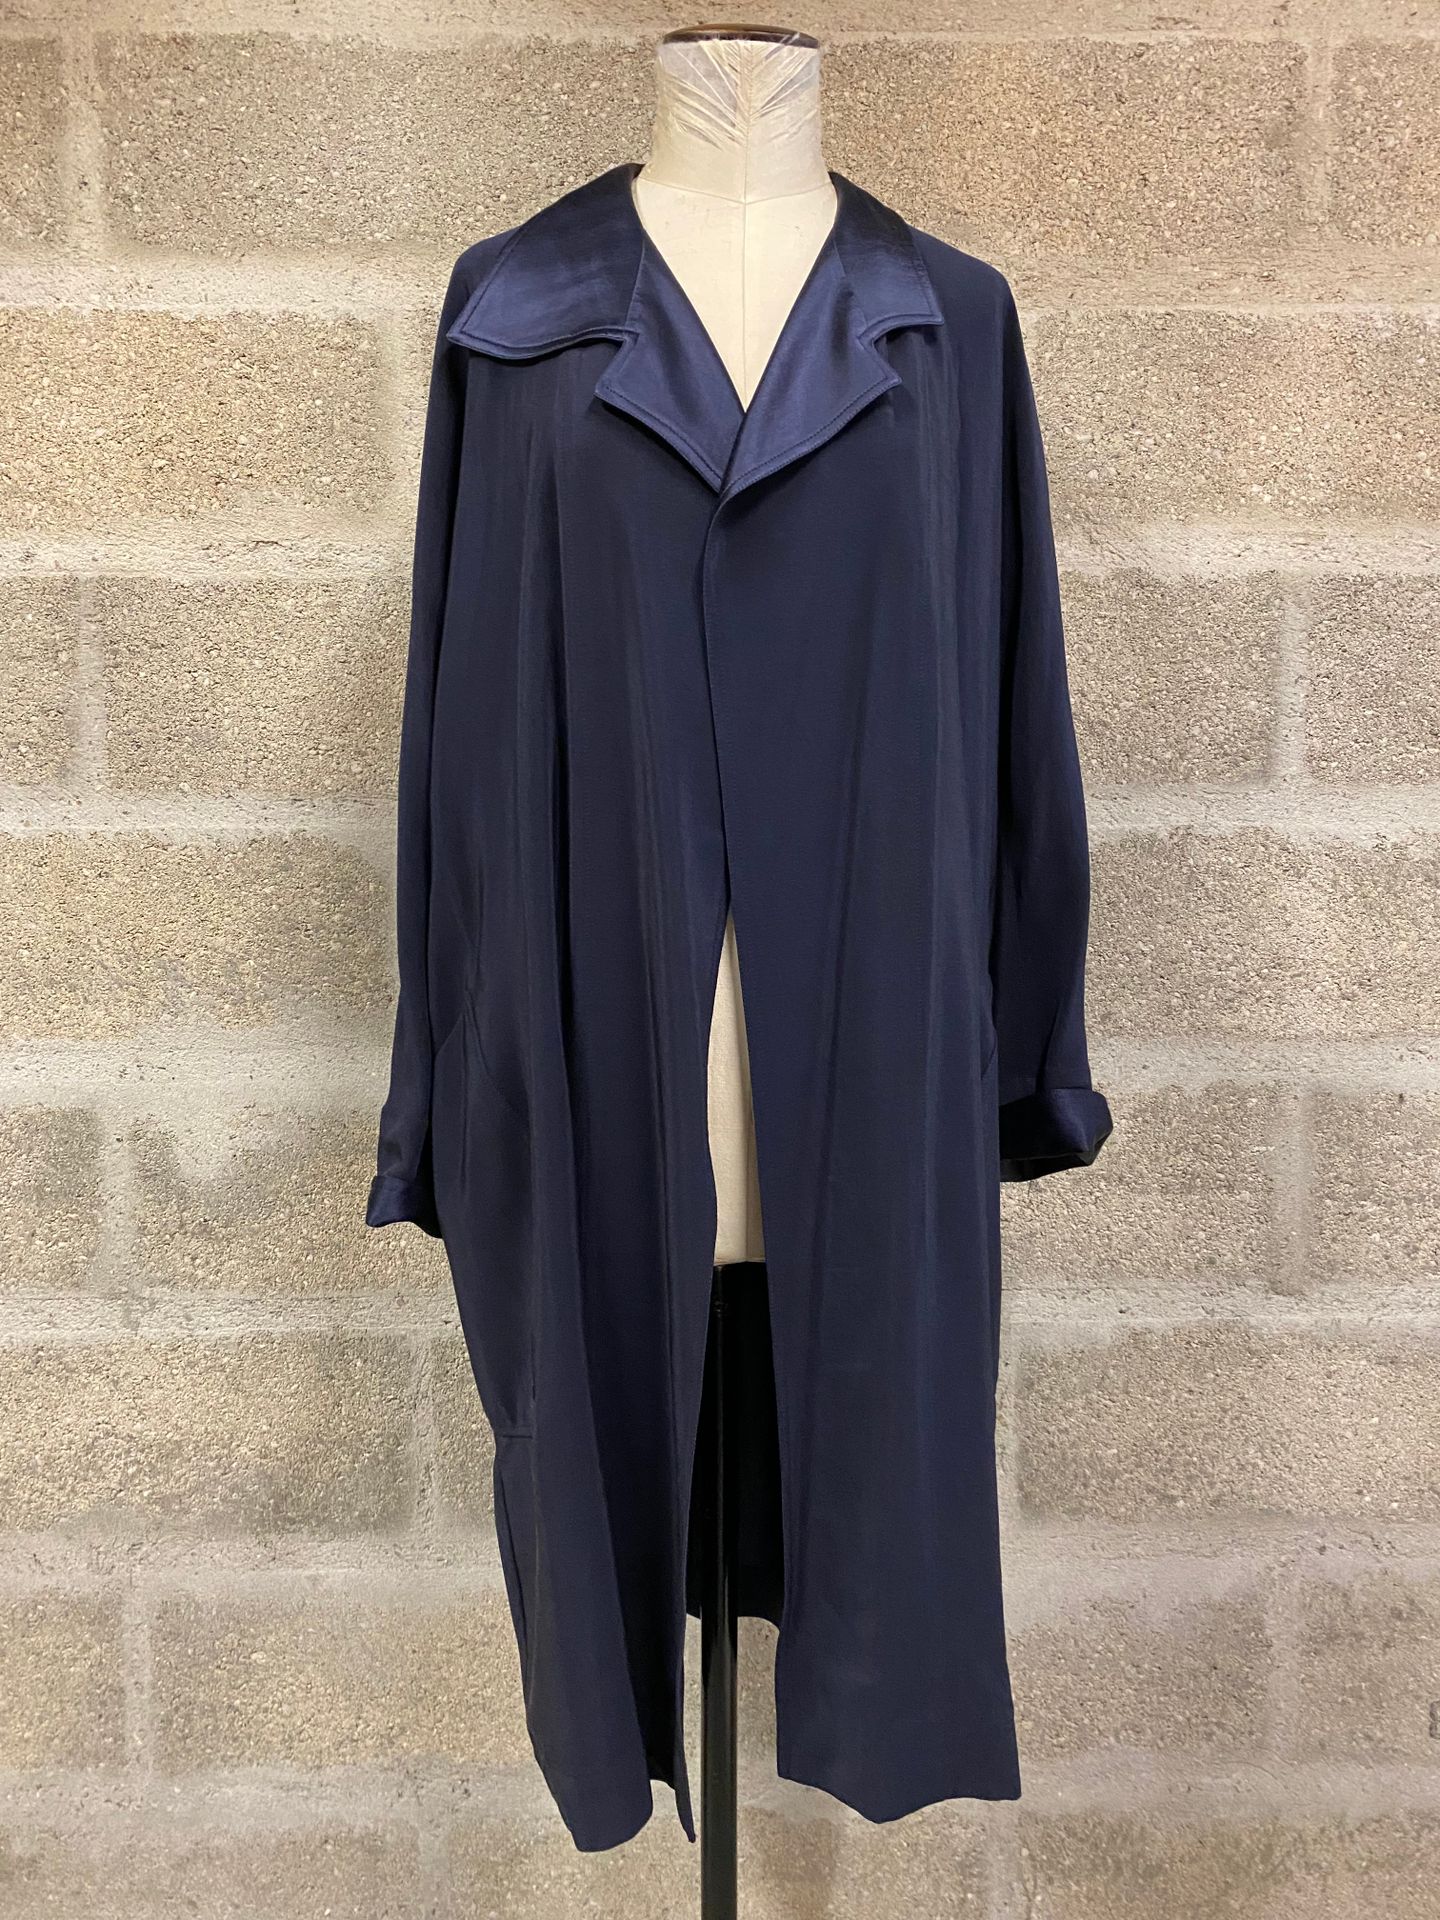 RENATA Abrigo de lana y seda de corte holgado, azul marino con solapas de raso 
&hellip;